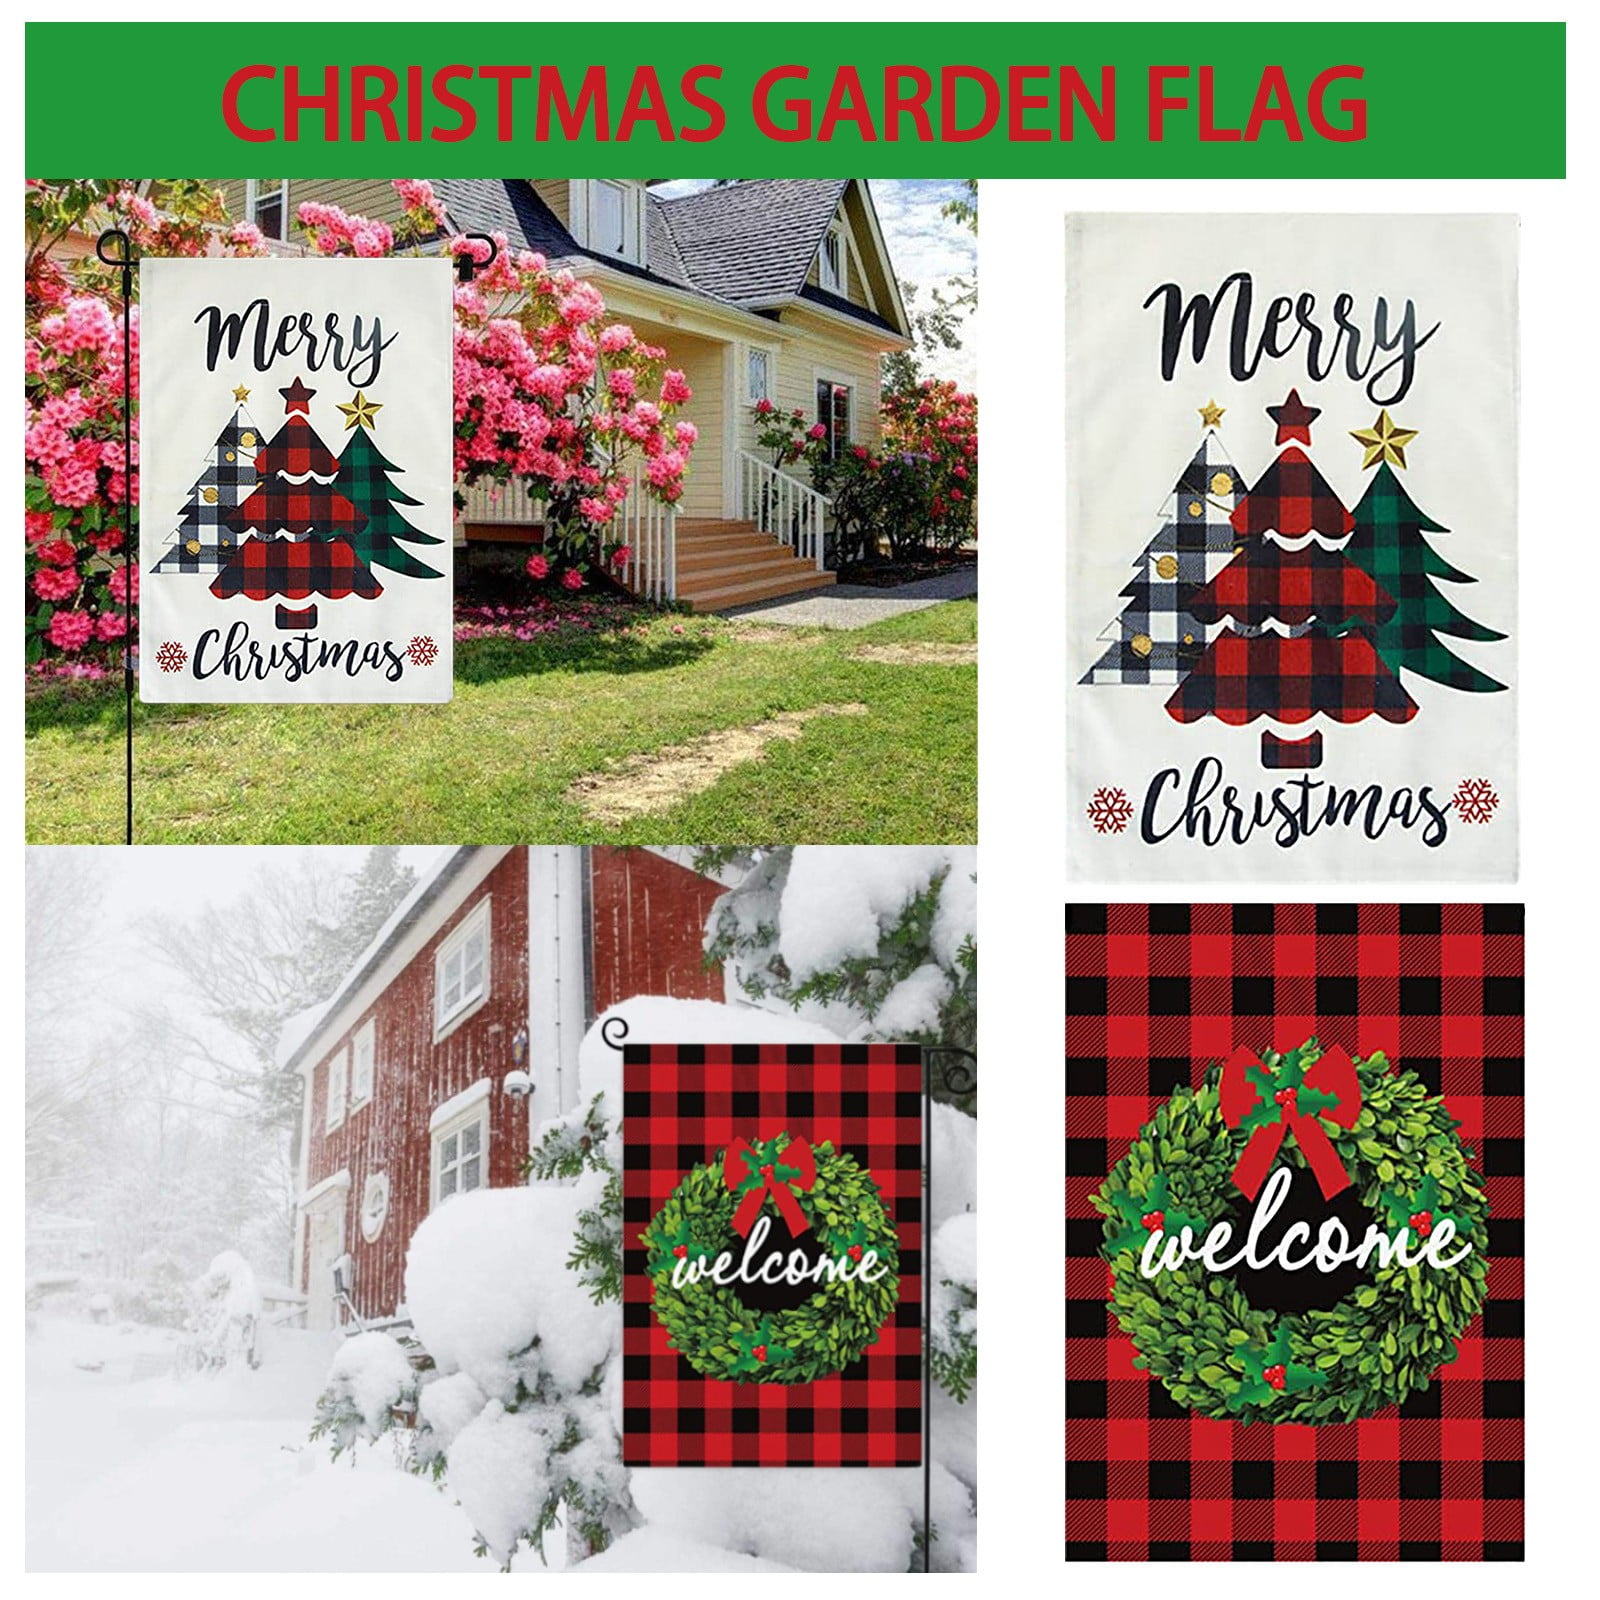 Christmas Winter Mittens Welcome House Garden Flag 12.5"x18" Yard Banner 